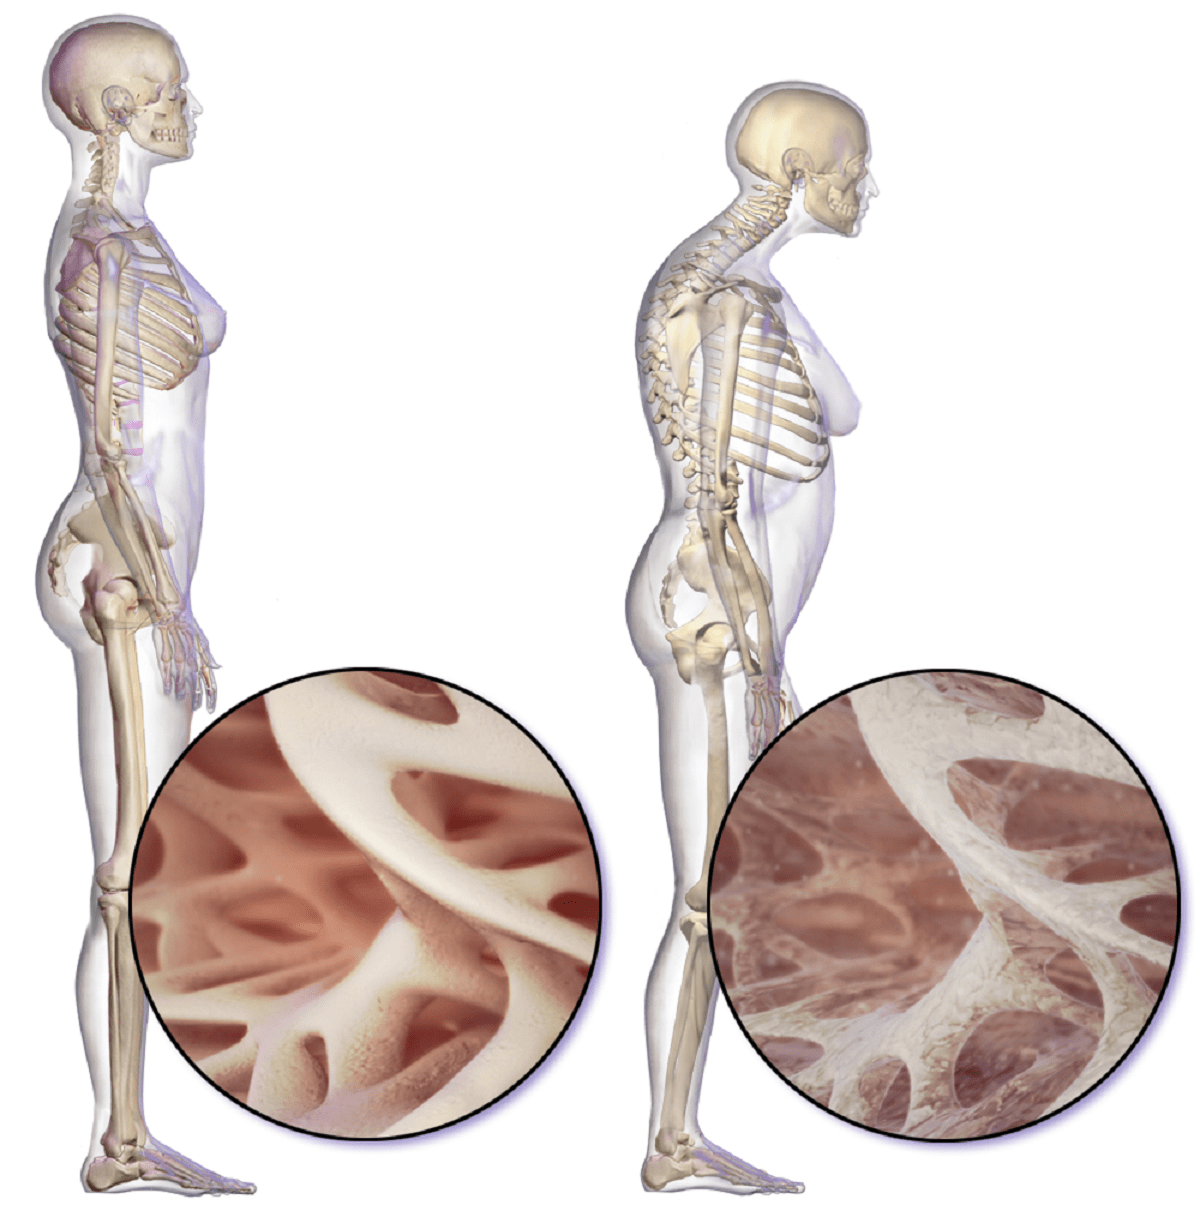 Levo je približana zdrava gobasta kost, desno pa kost, ki ima osteoporozo